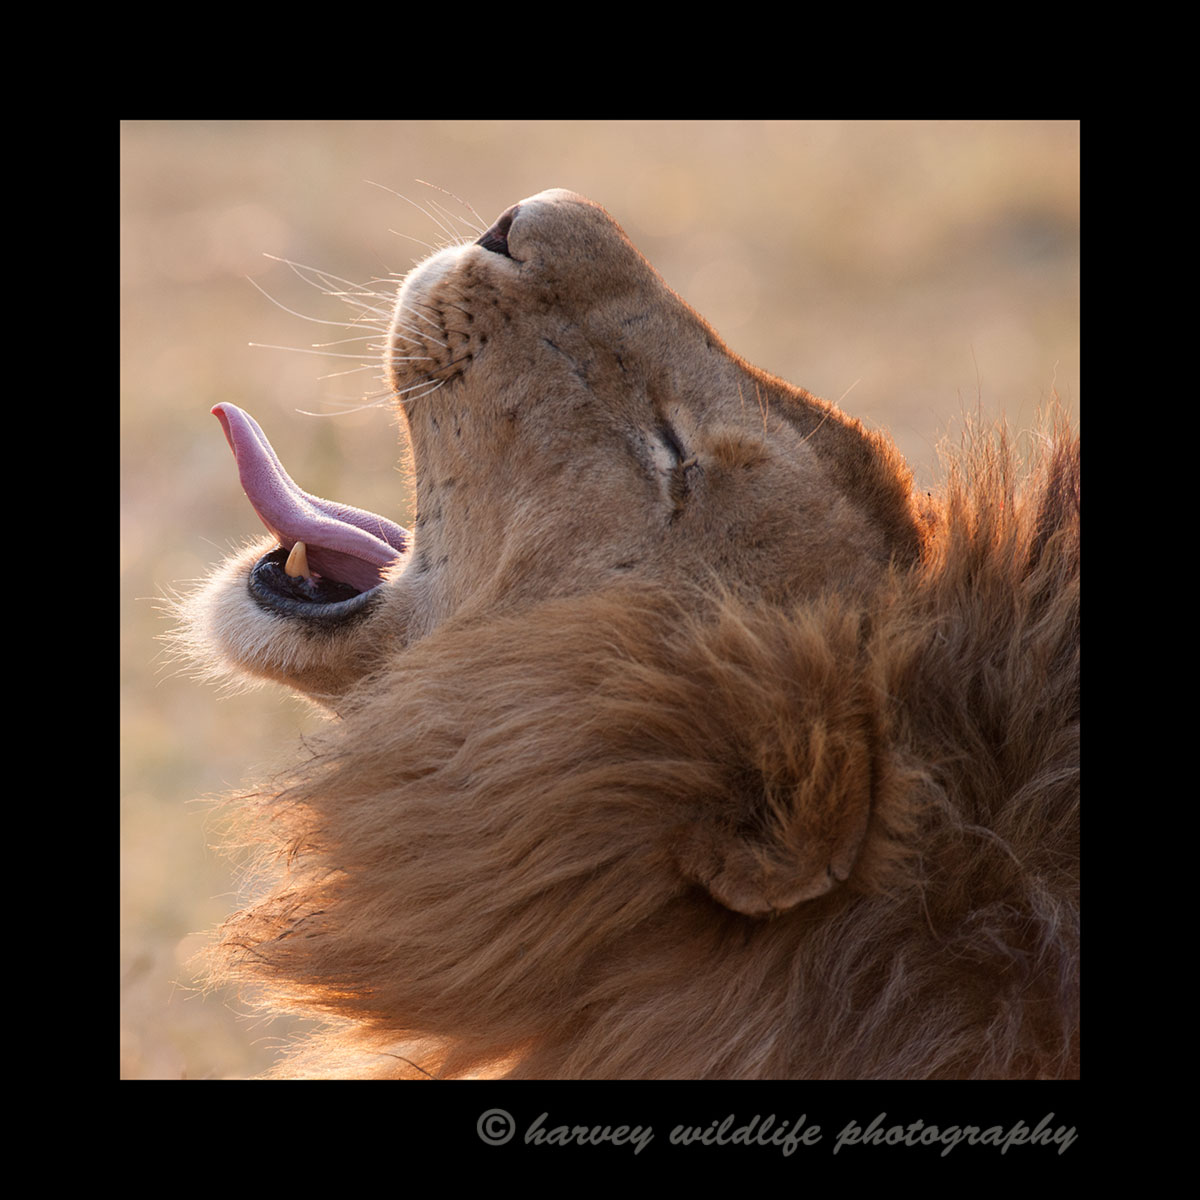 Male lion yawning in the Masai Mara in 2012.